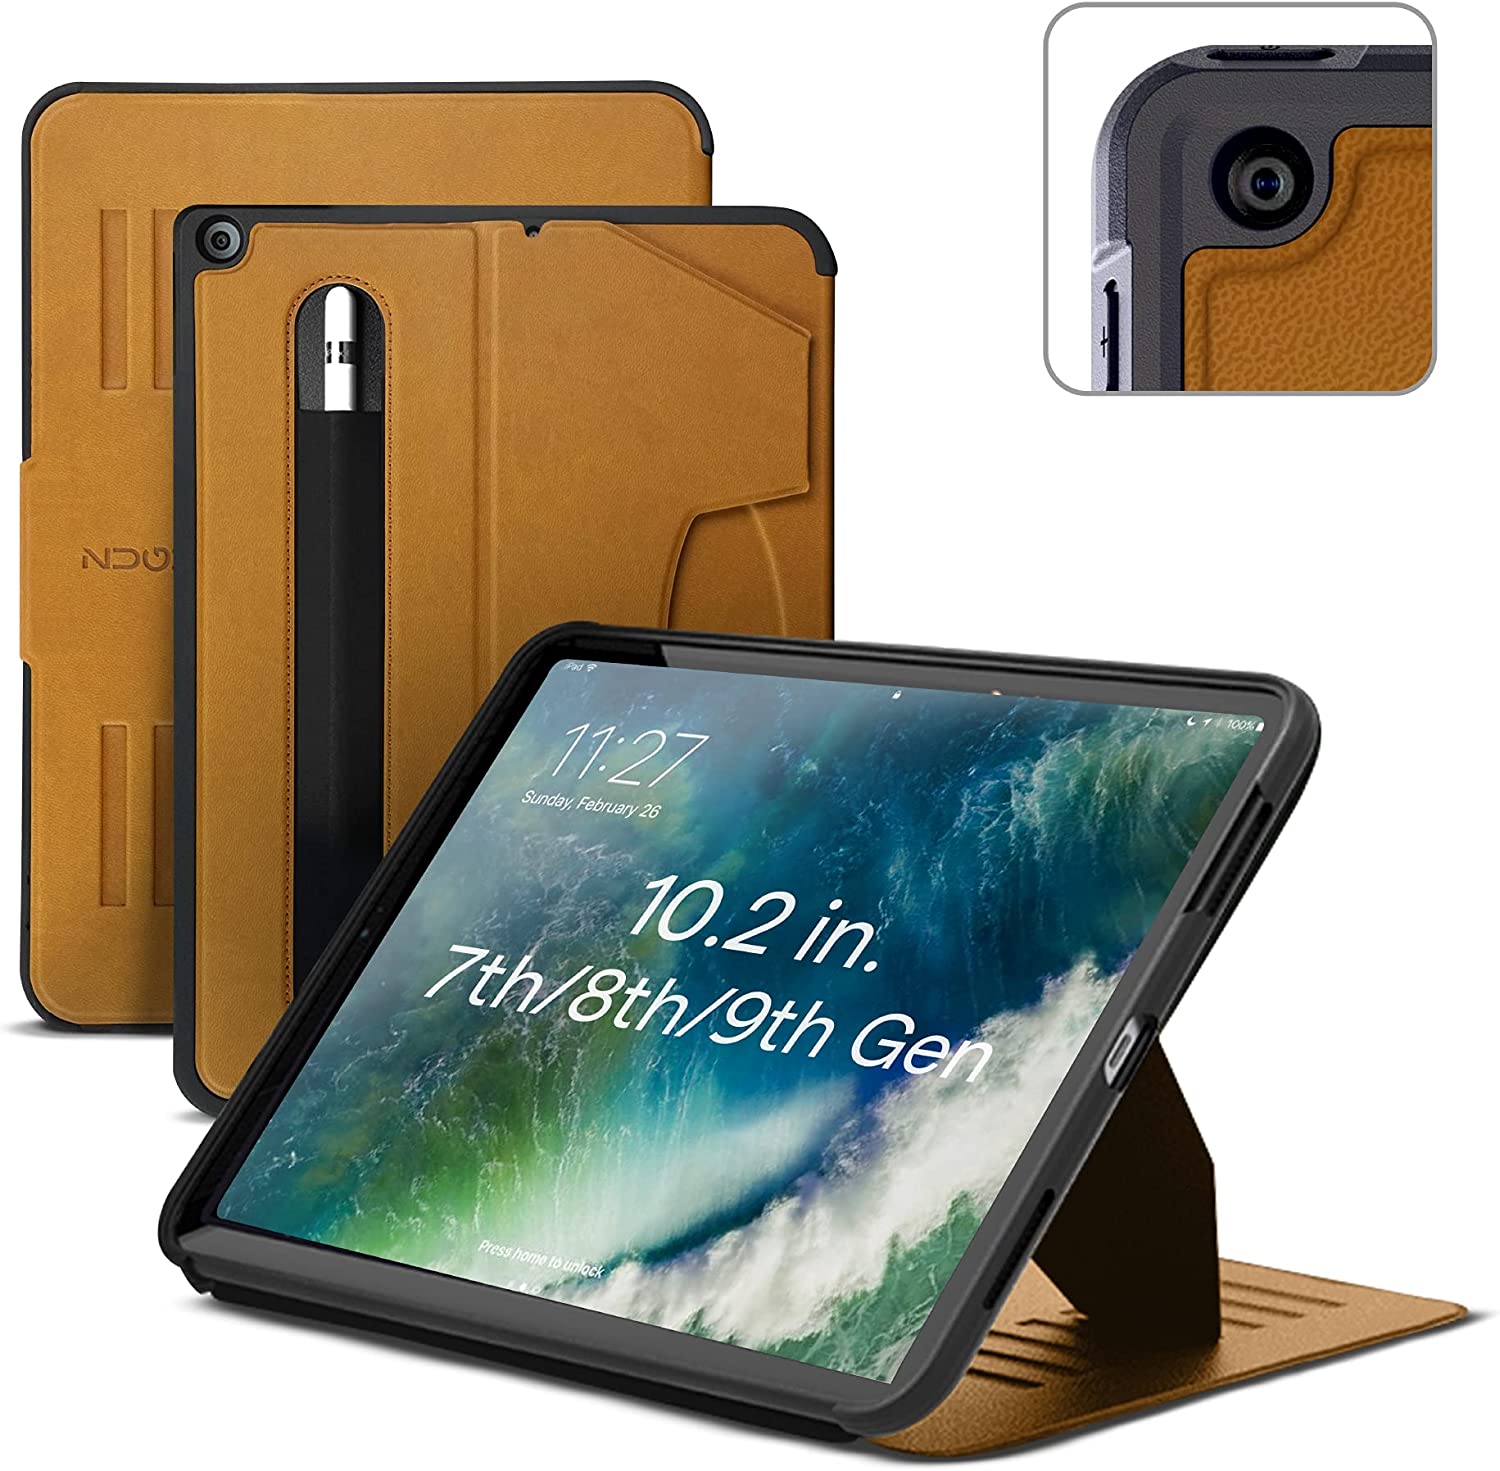 Zugu iPad Folio Case Magnetic Stand iPad 7th / 8th / 9th Gen 10.2 inch - Brown